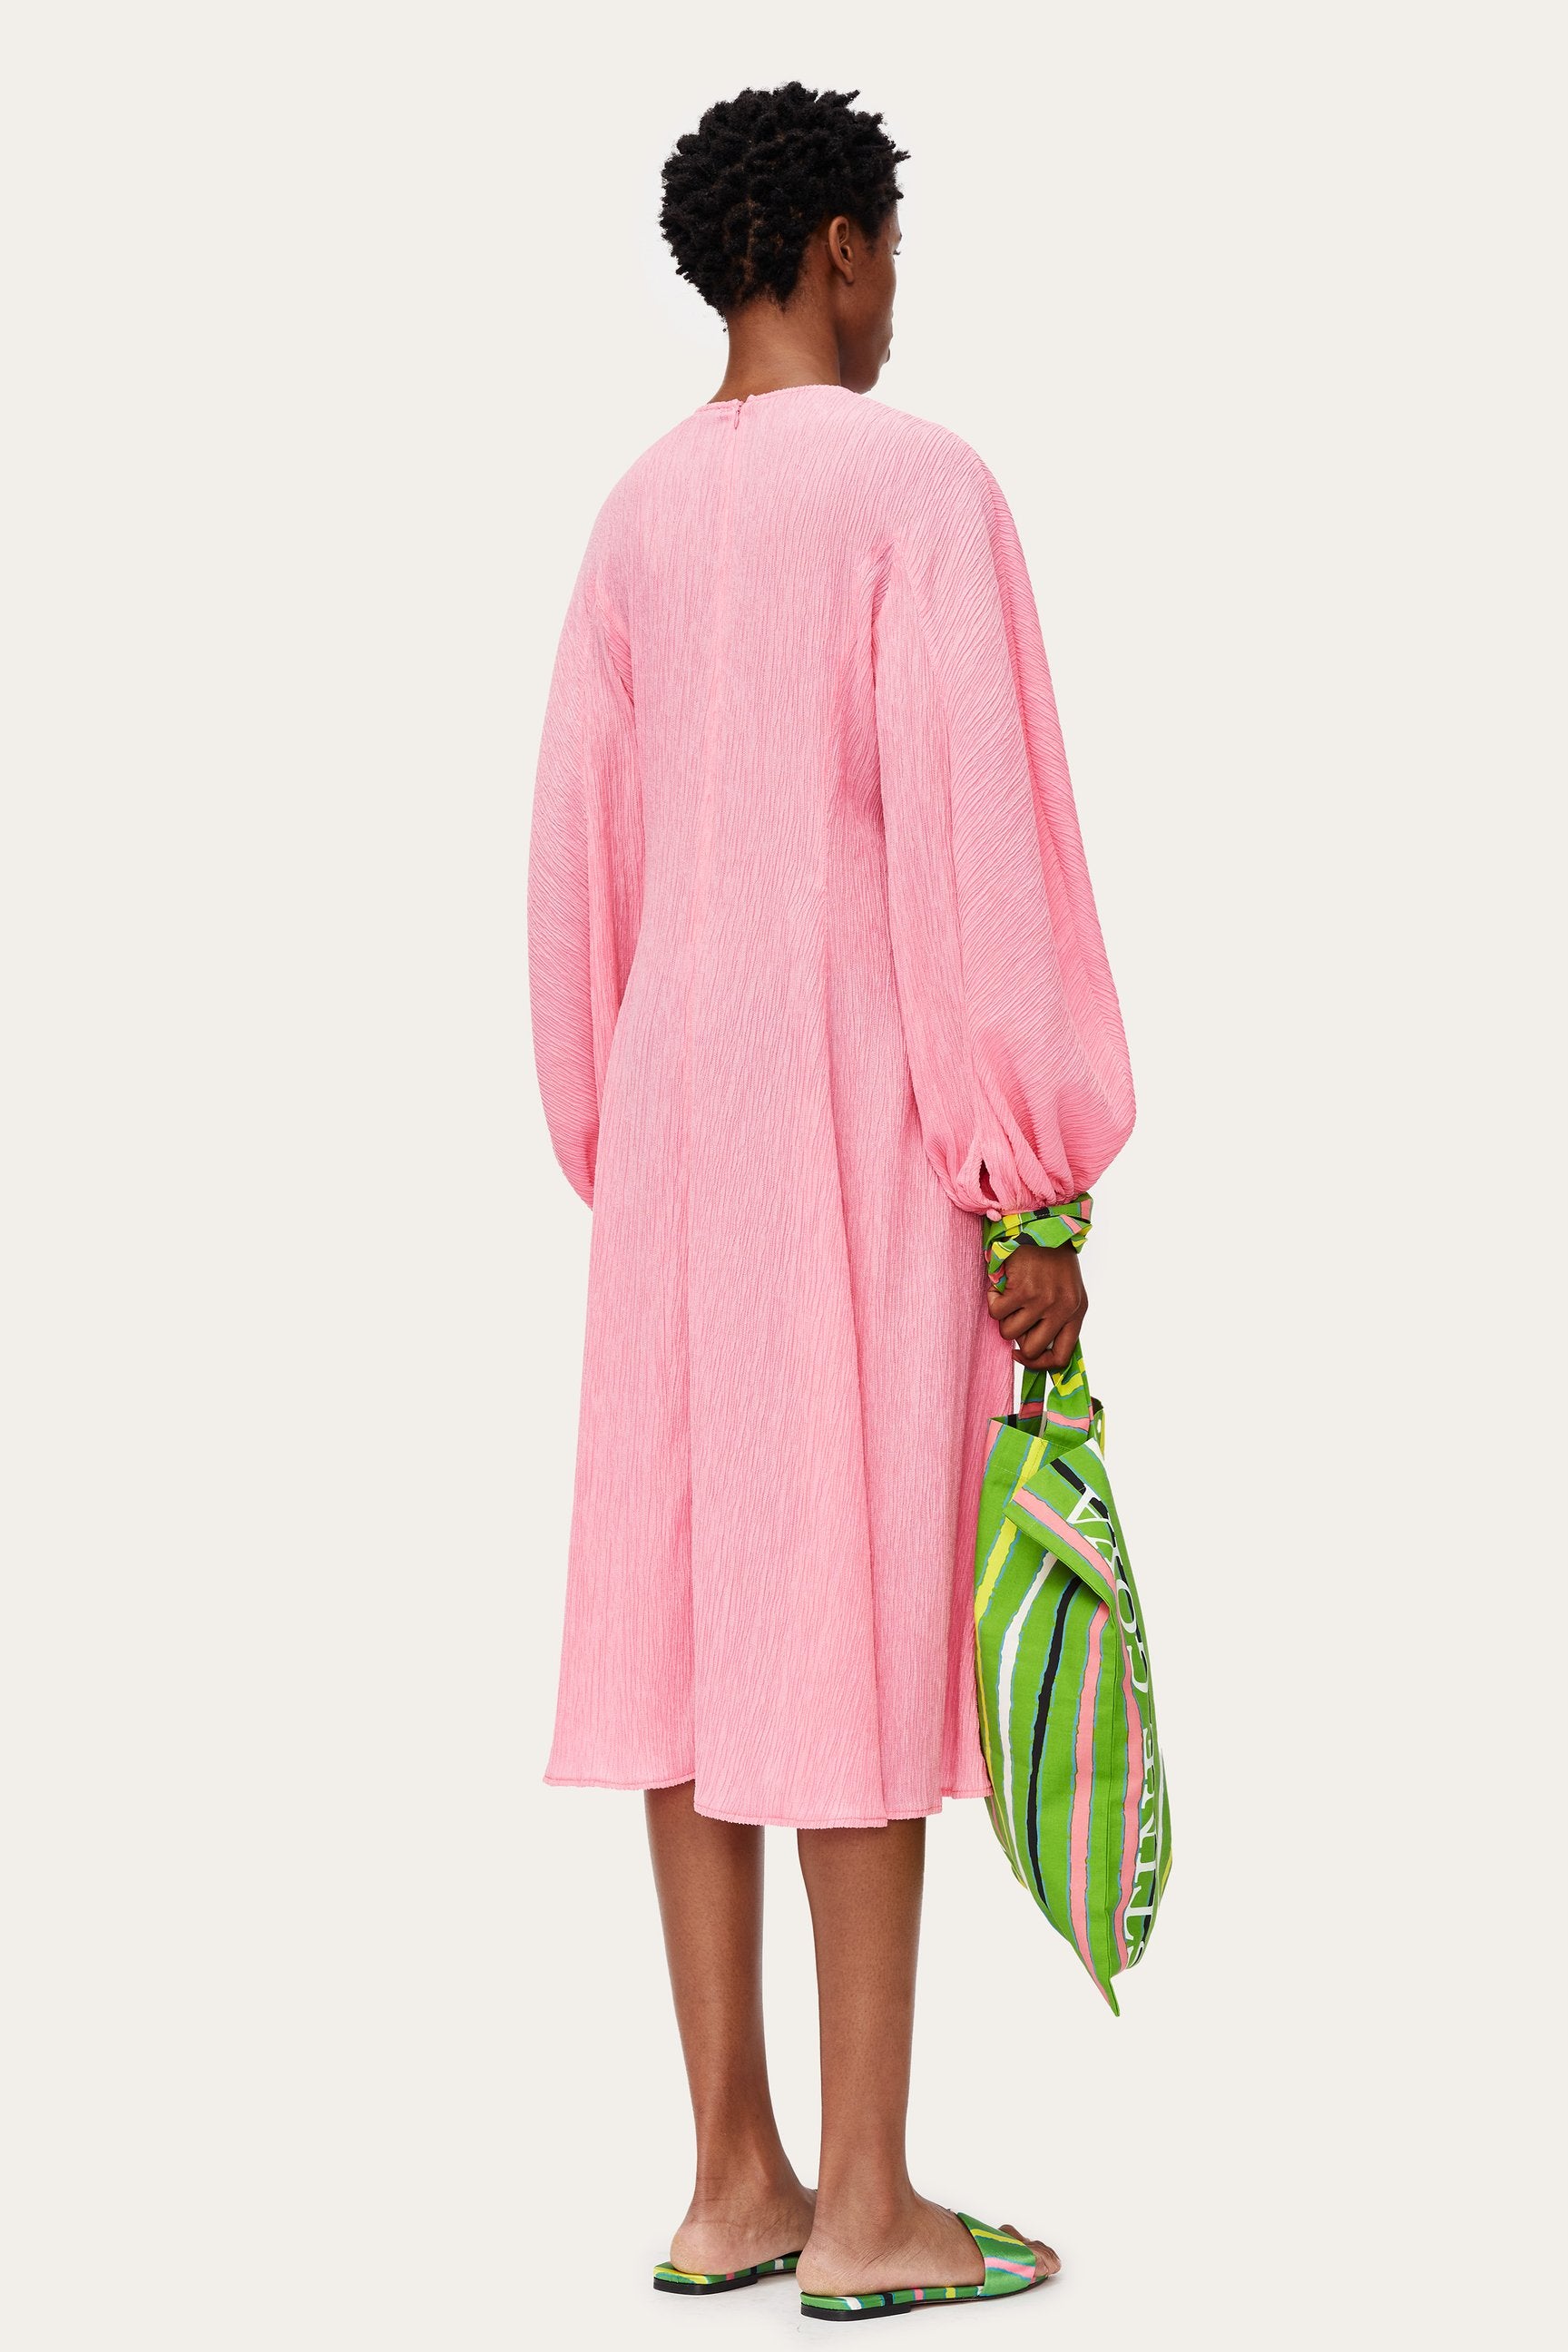 Rosen Dress - Pink - Babs The Label